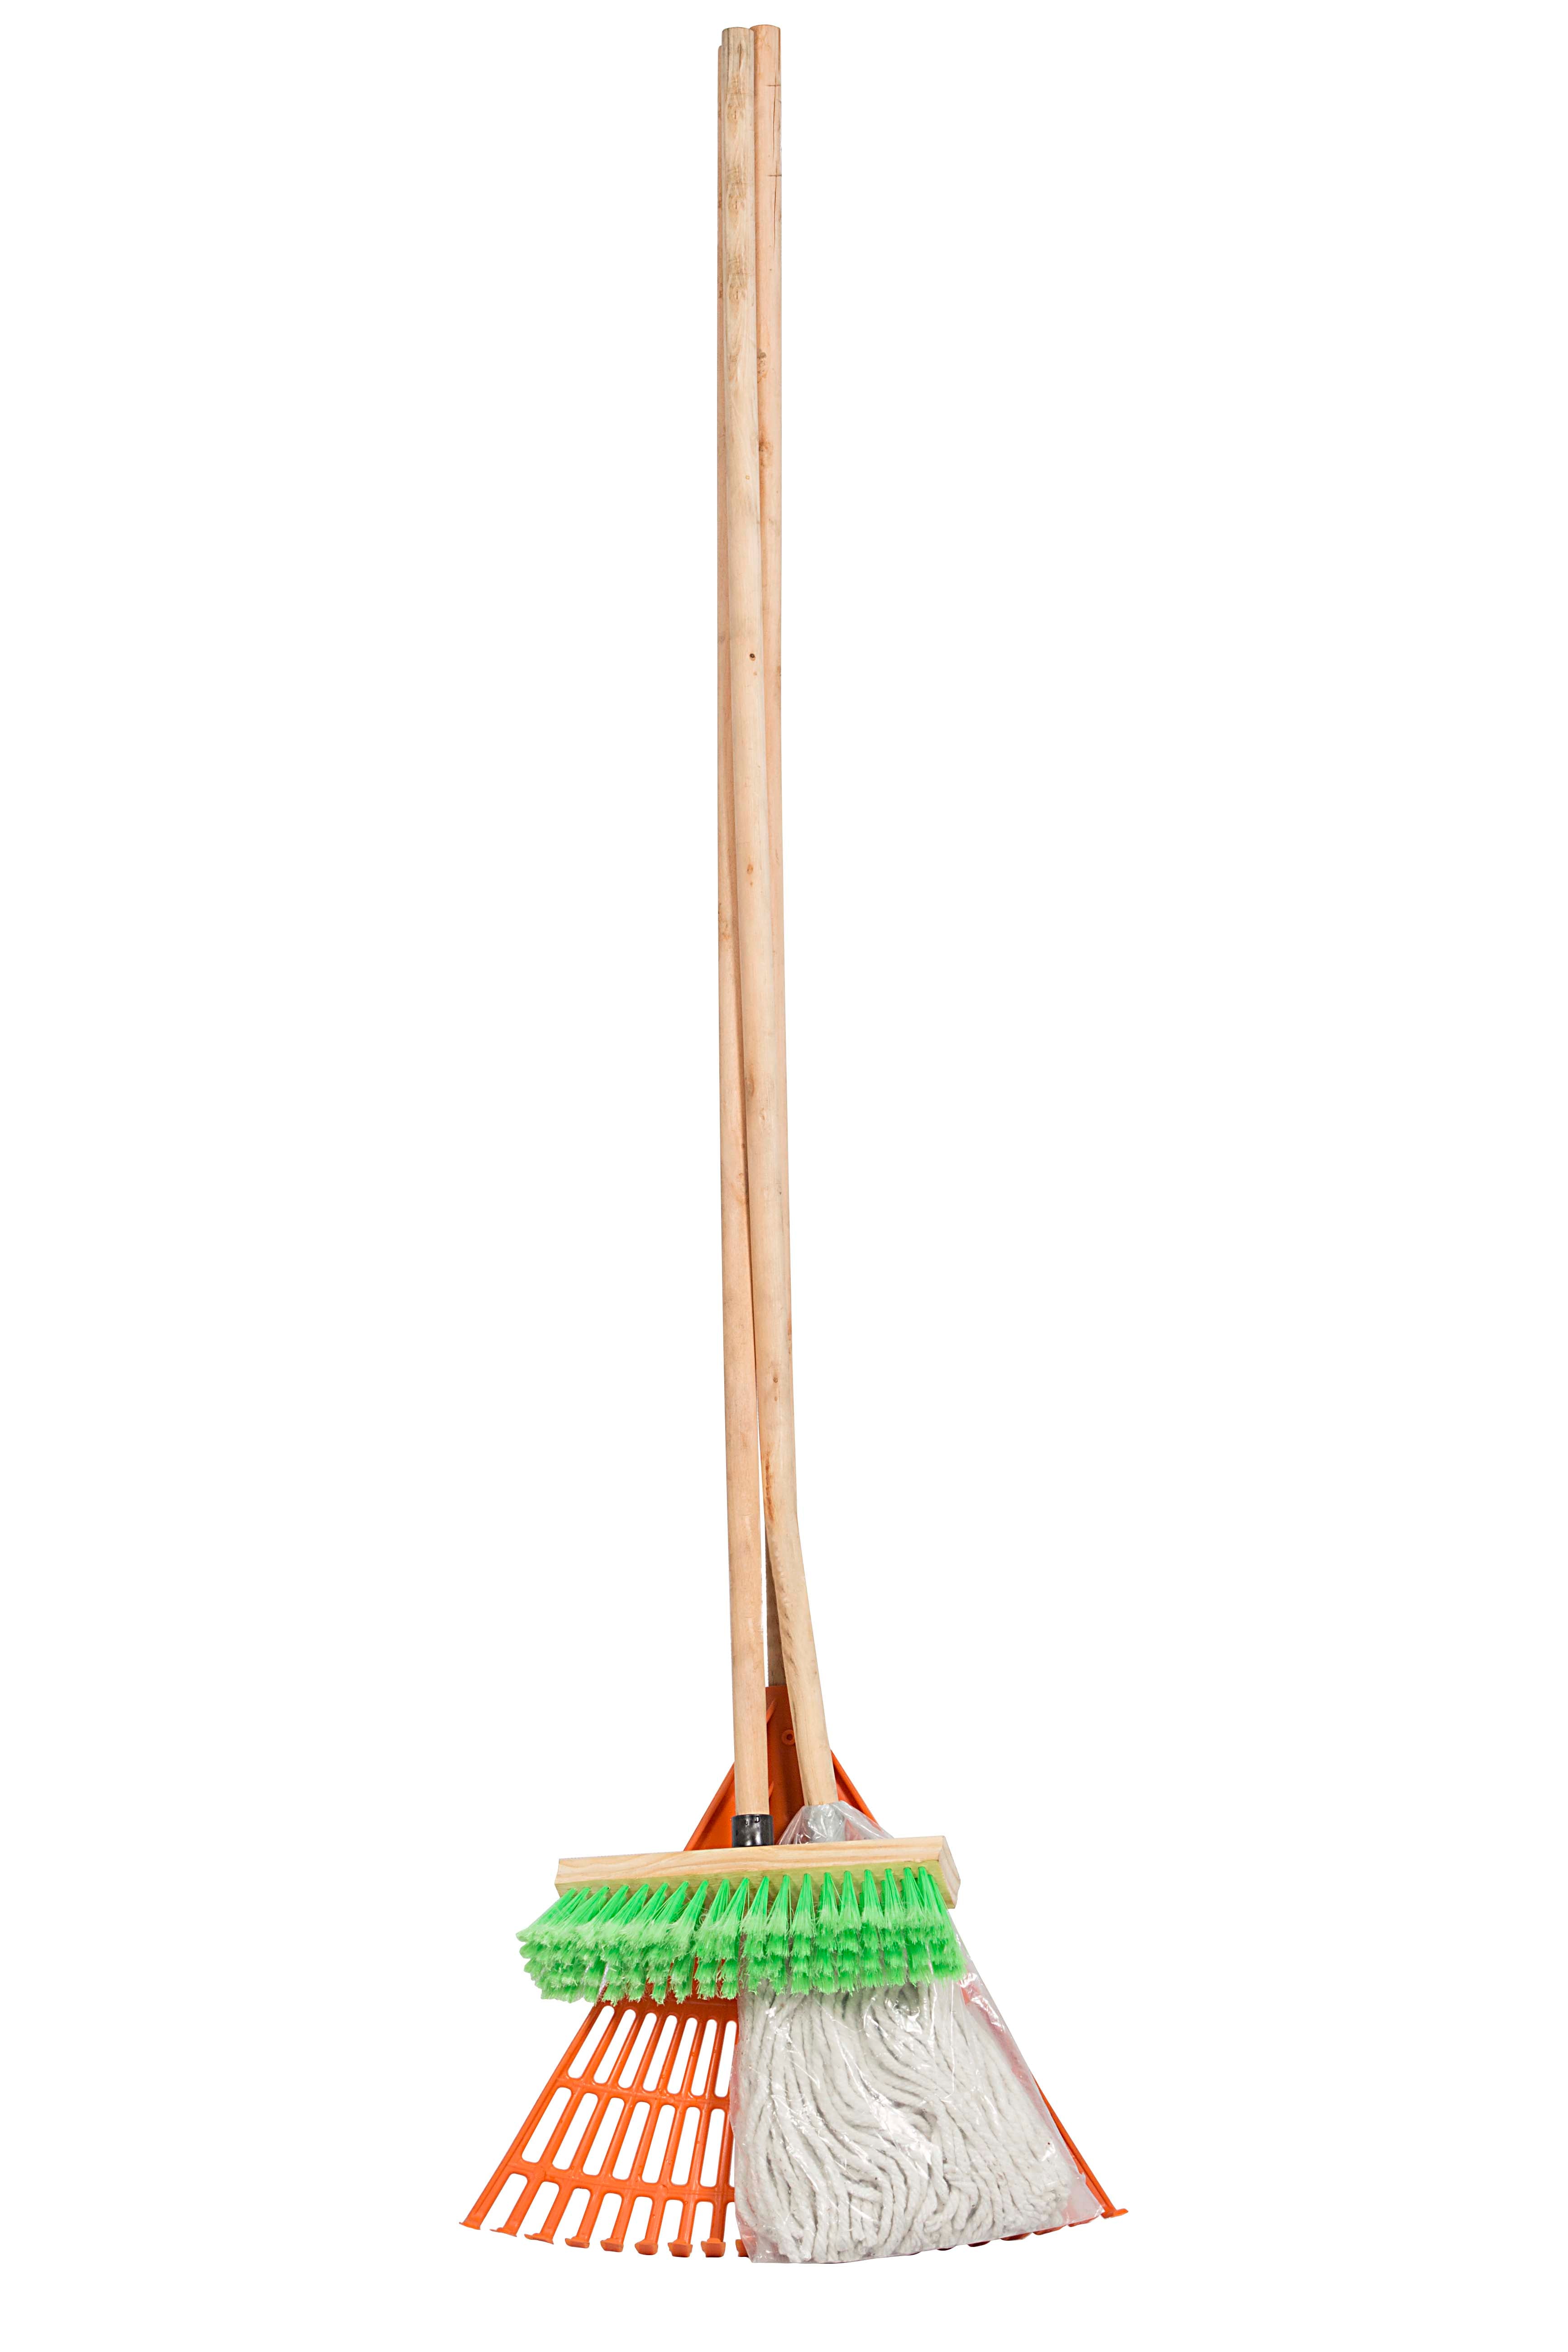 House Cleaning Garden Mop / Rake / Broom Combo